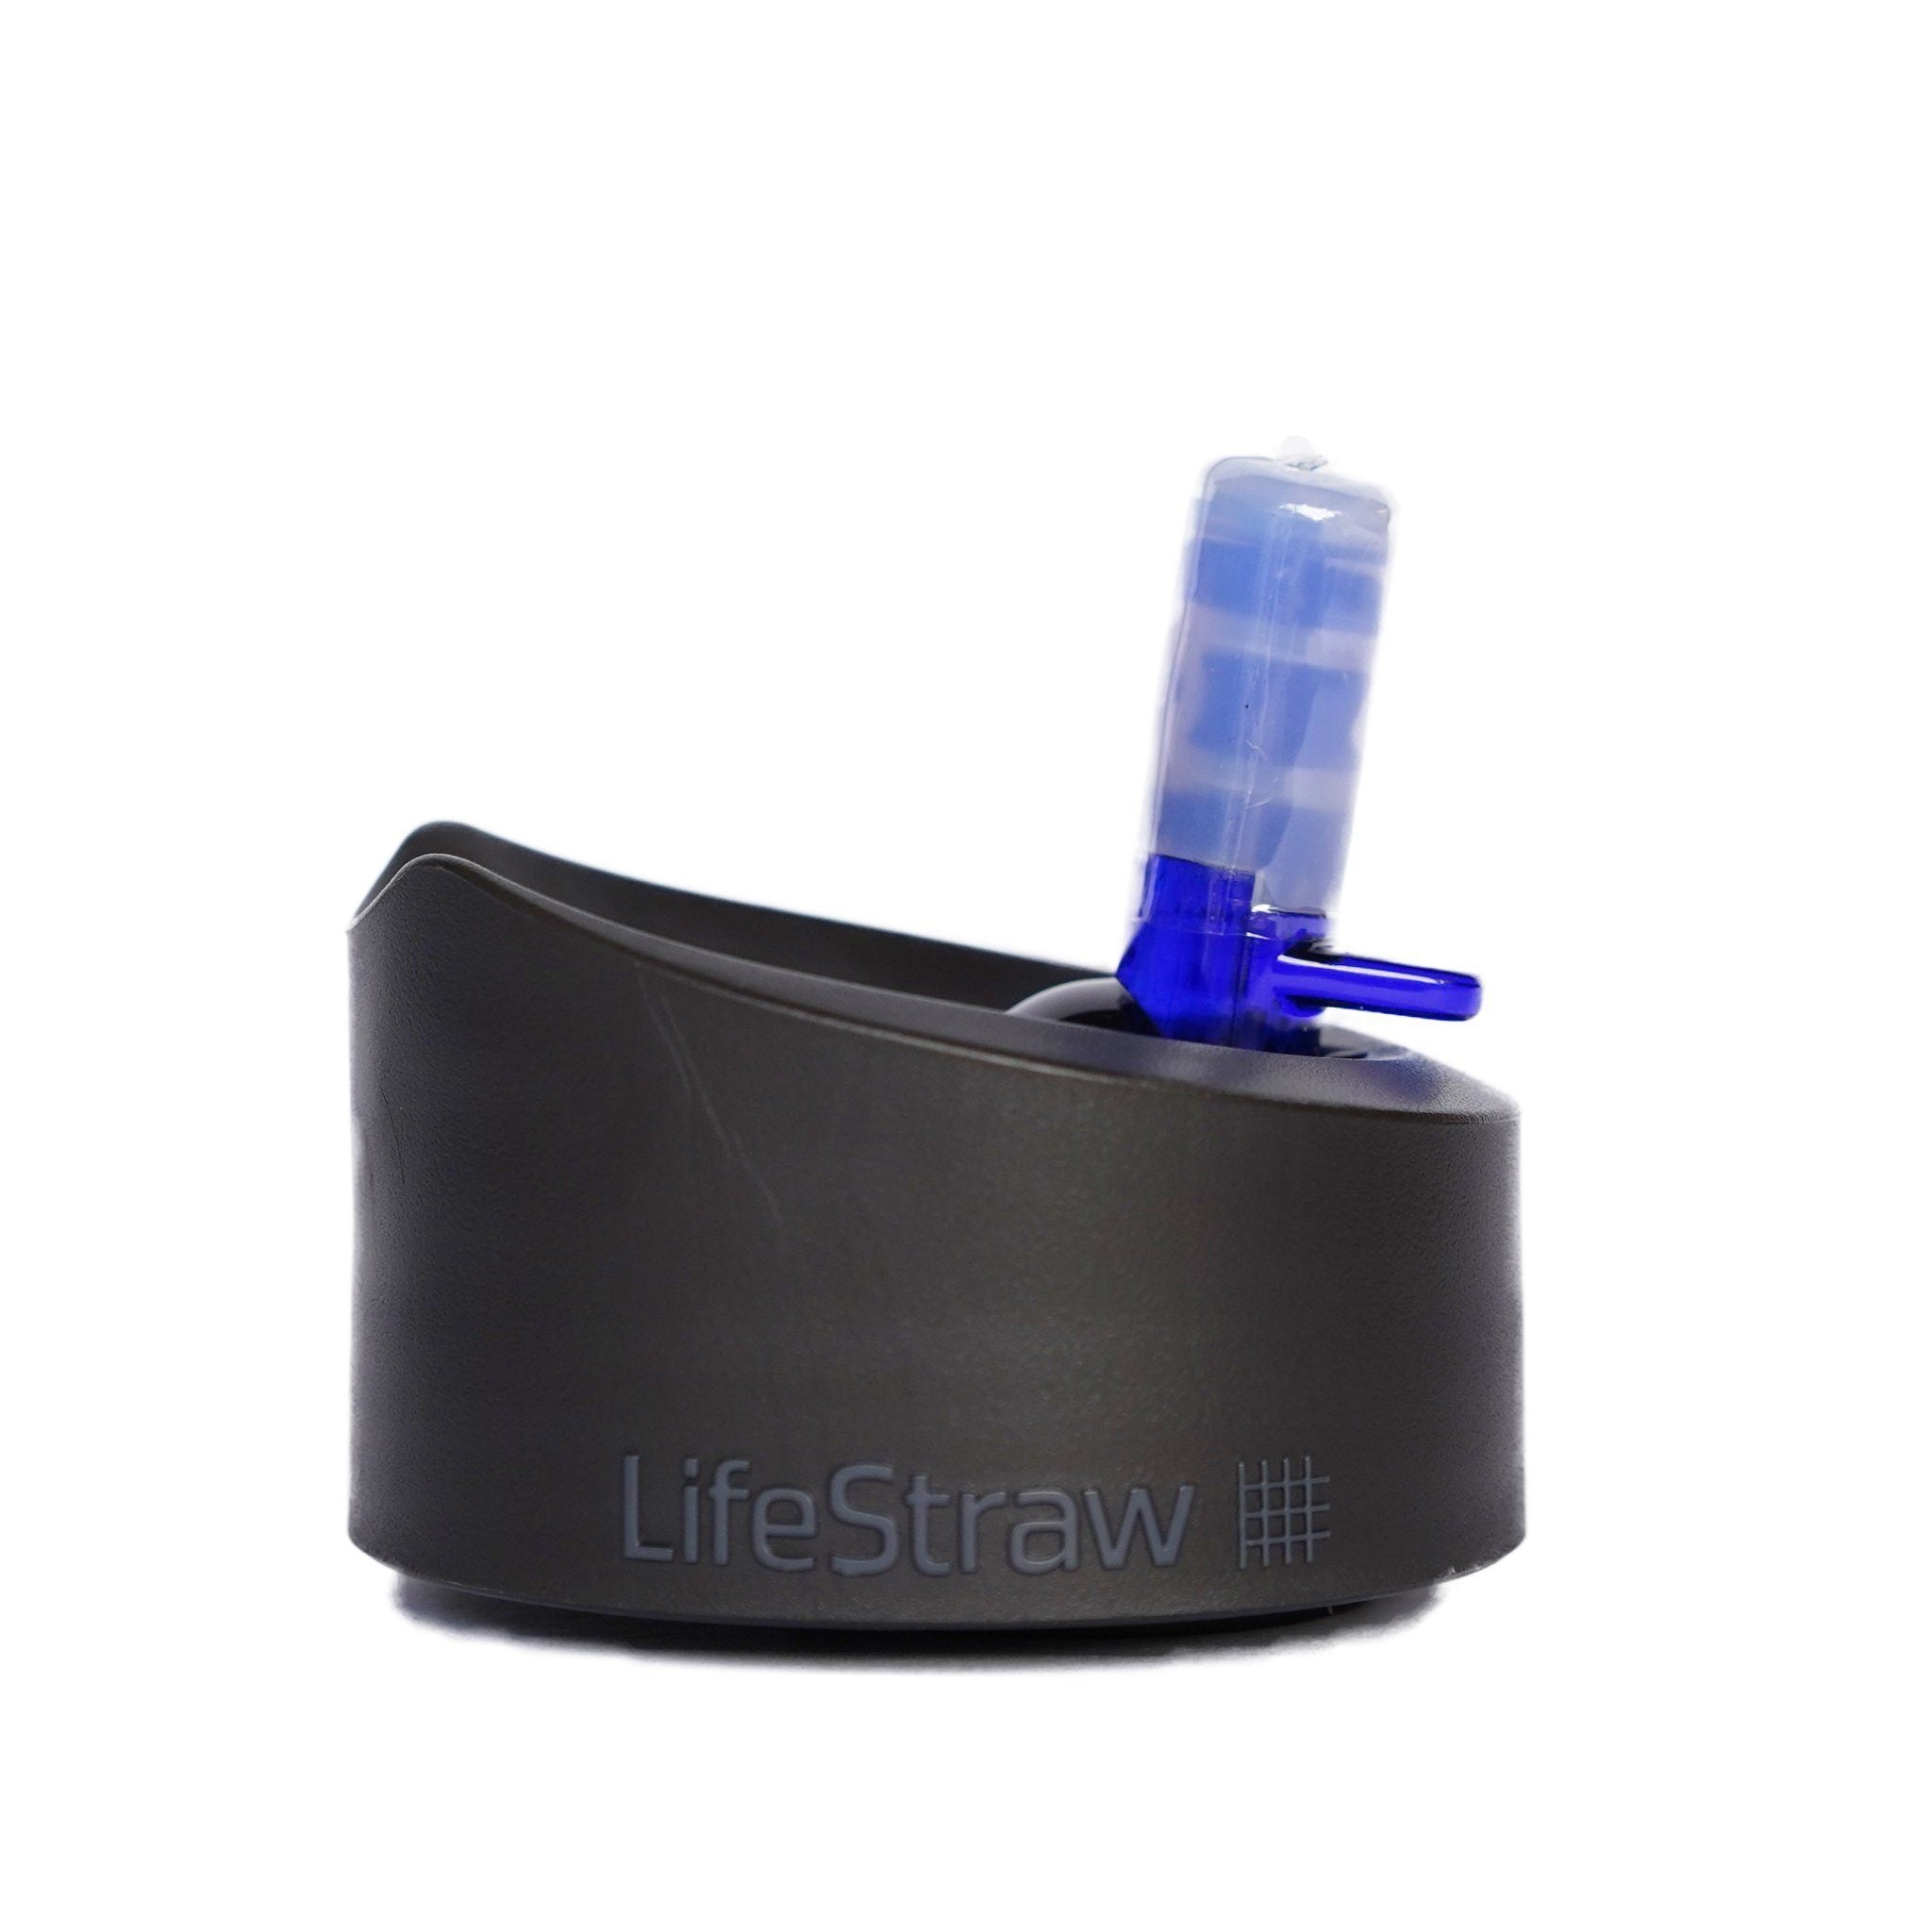 LifeStraw Go Series | Replacement Caps Merlot Me Away